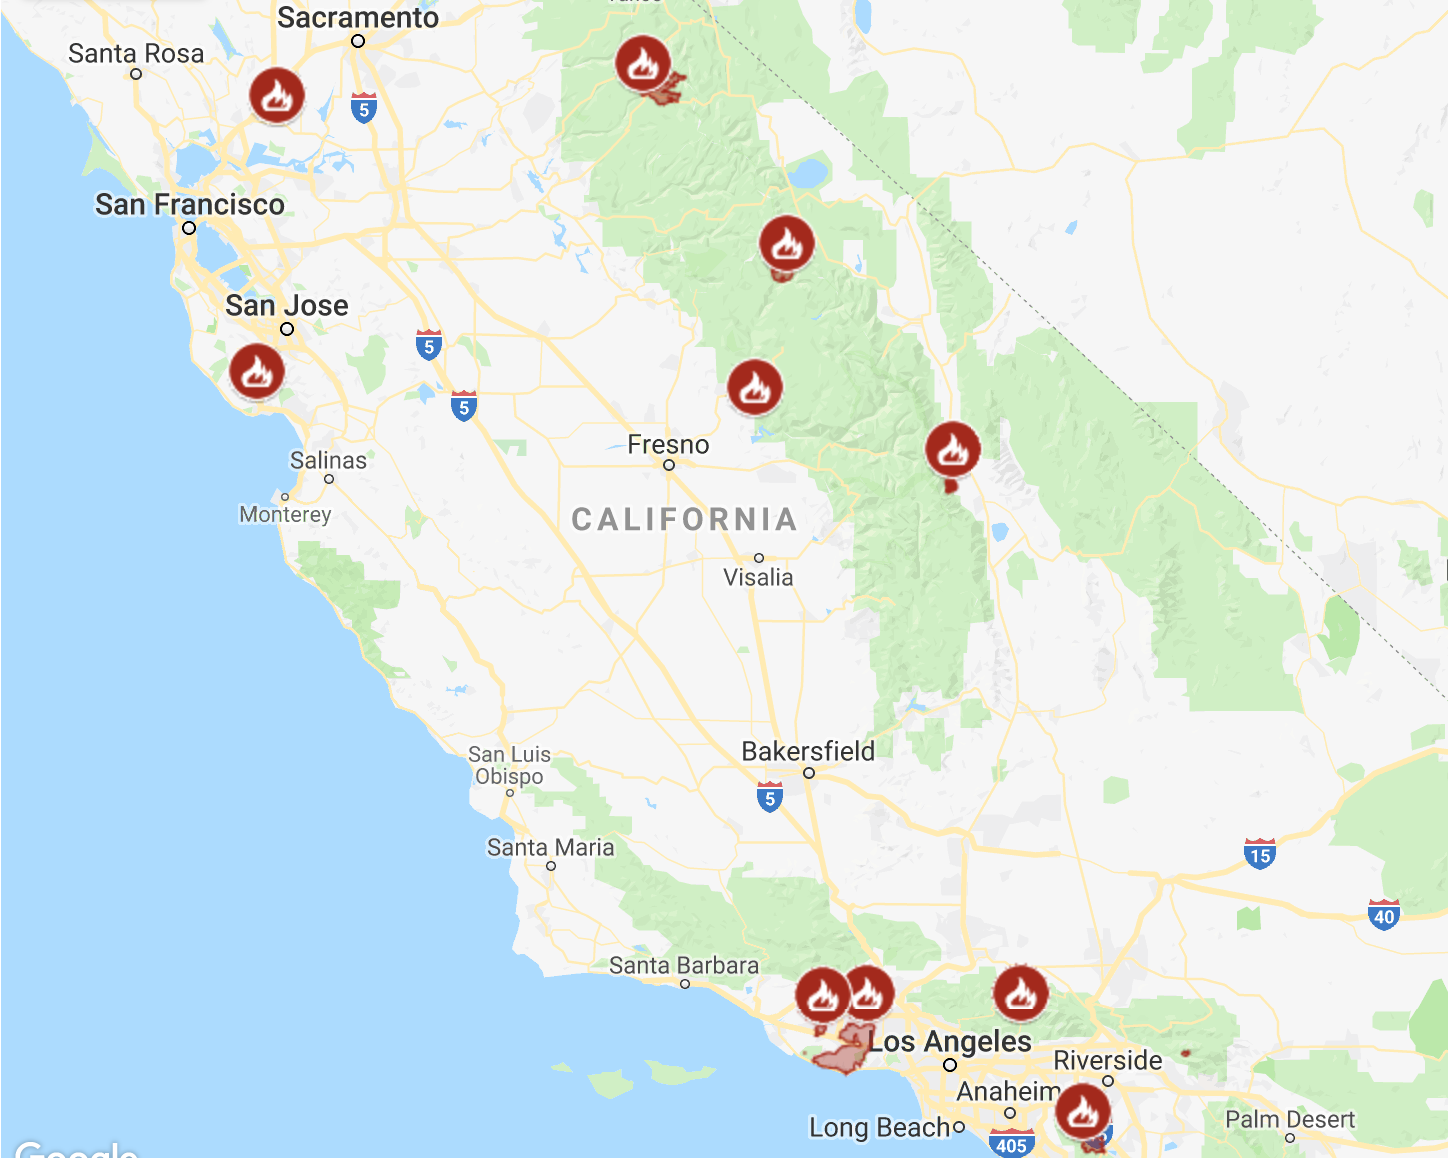 California wildfires 2018